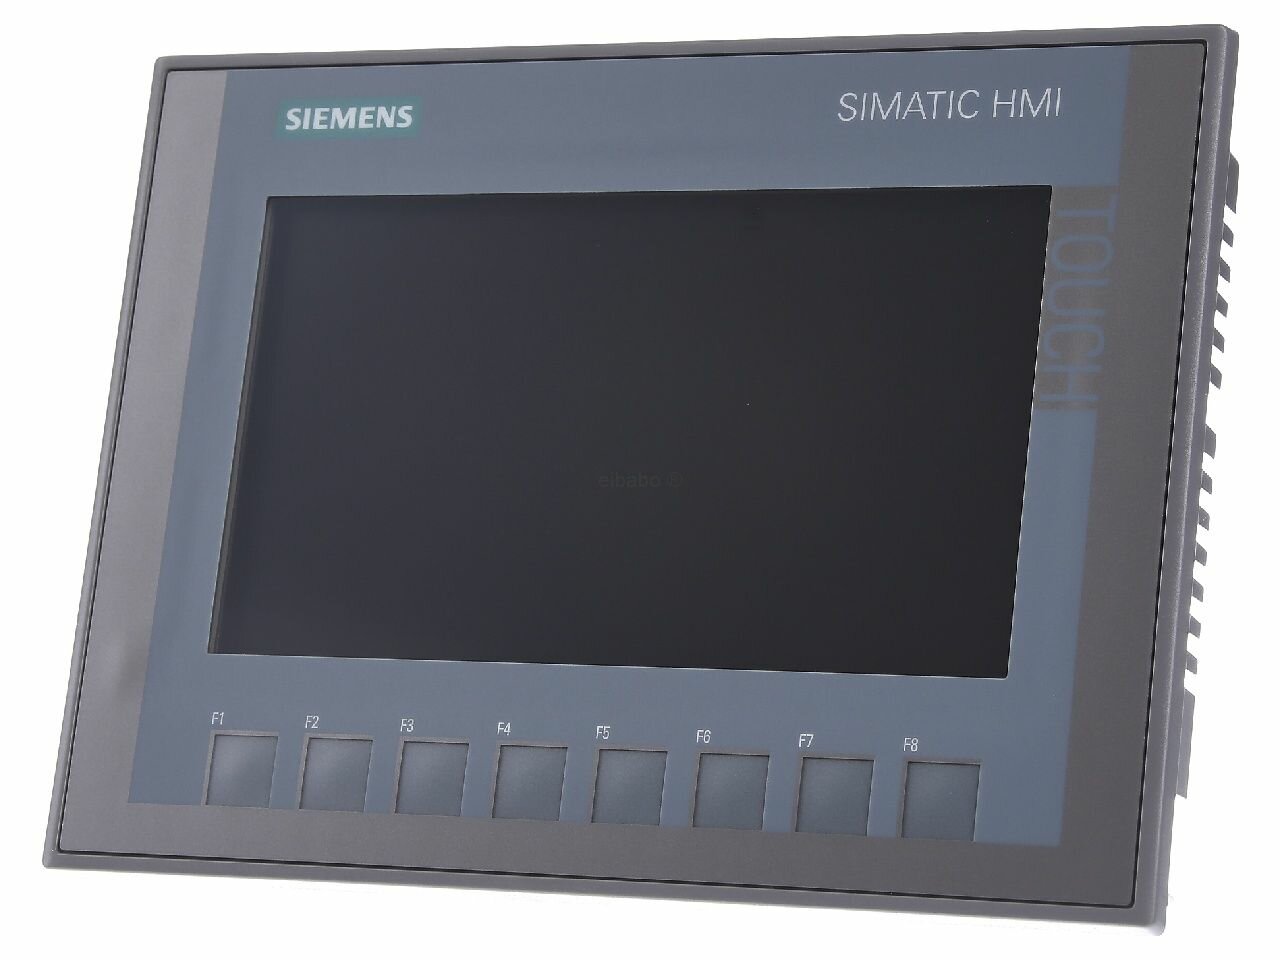 Панель оператора SIMATIC HMI KTP700 BASIC